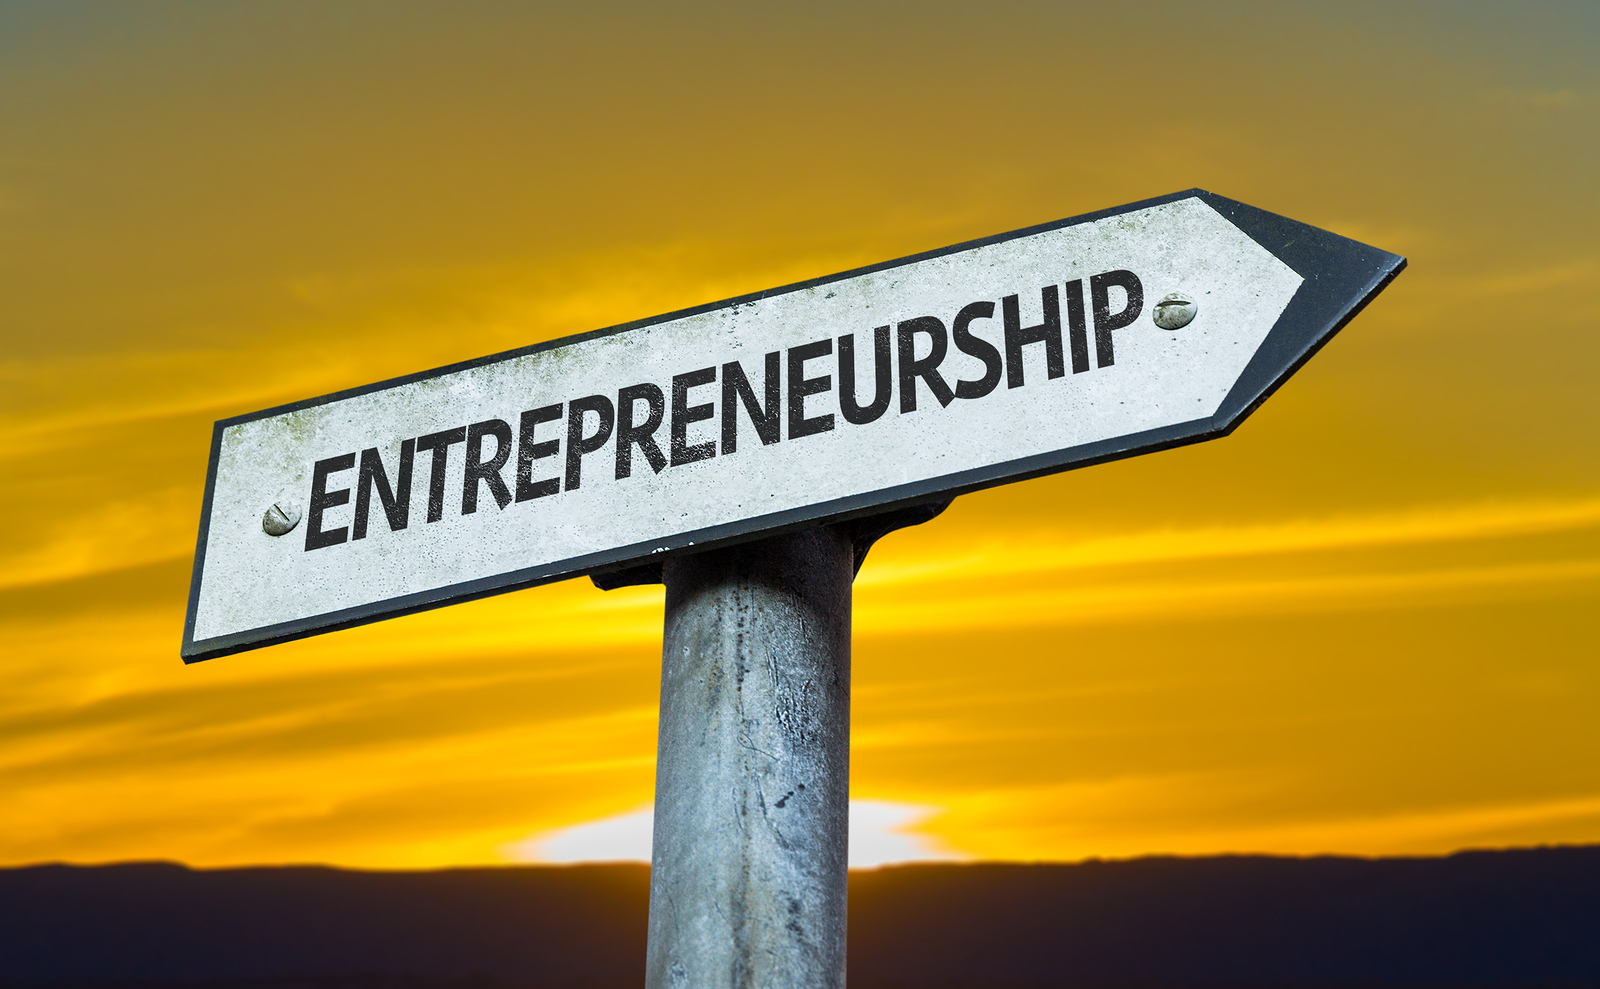 Entrepreneurship sign with a sunset background